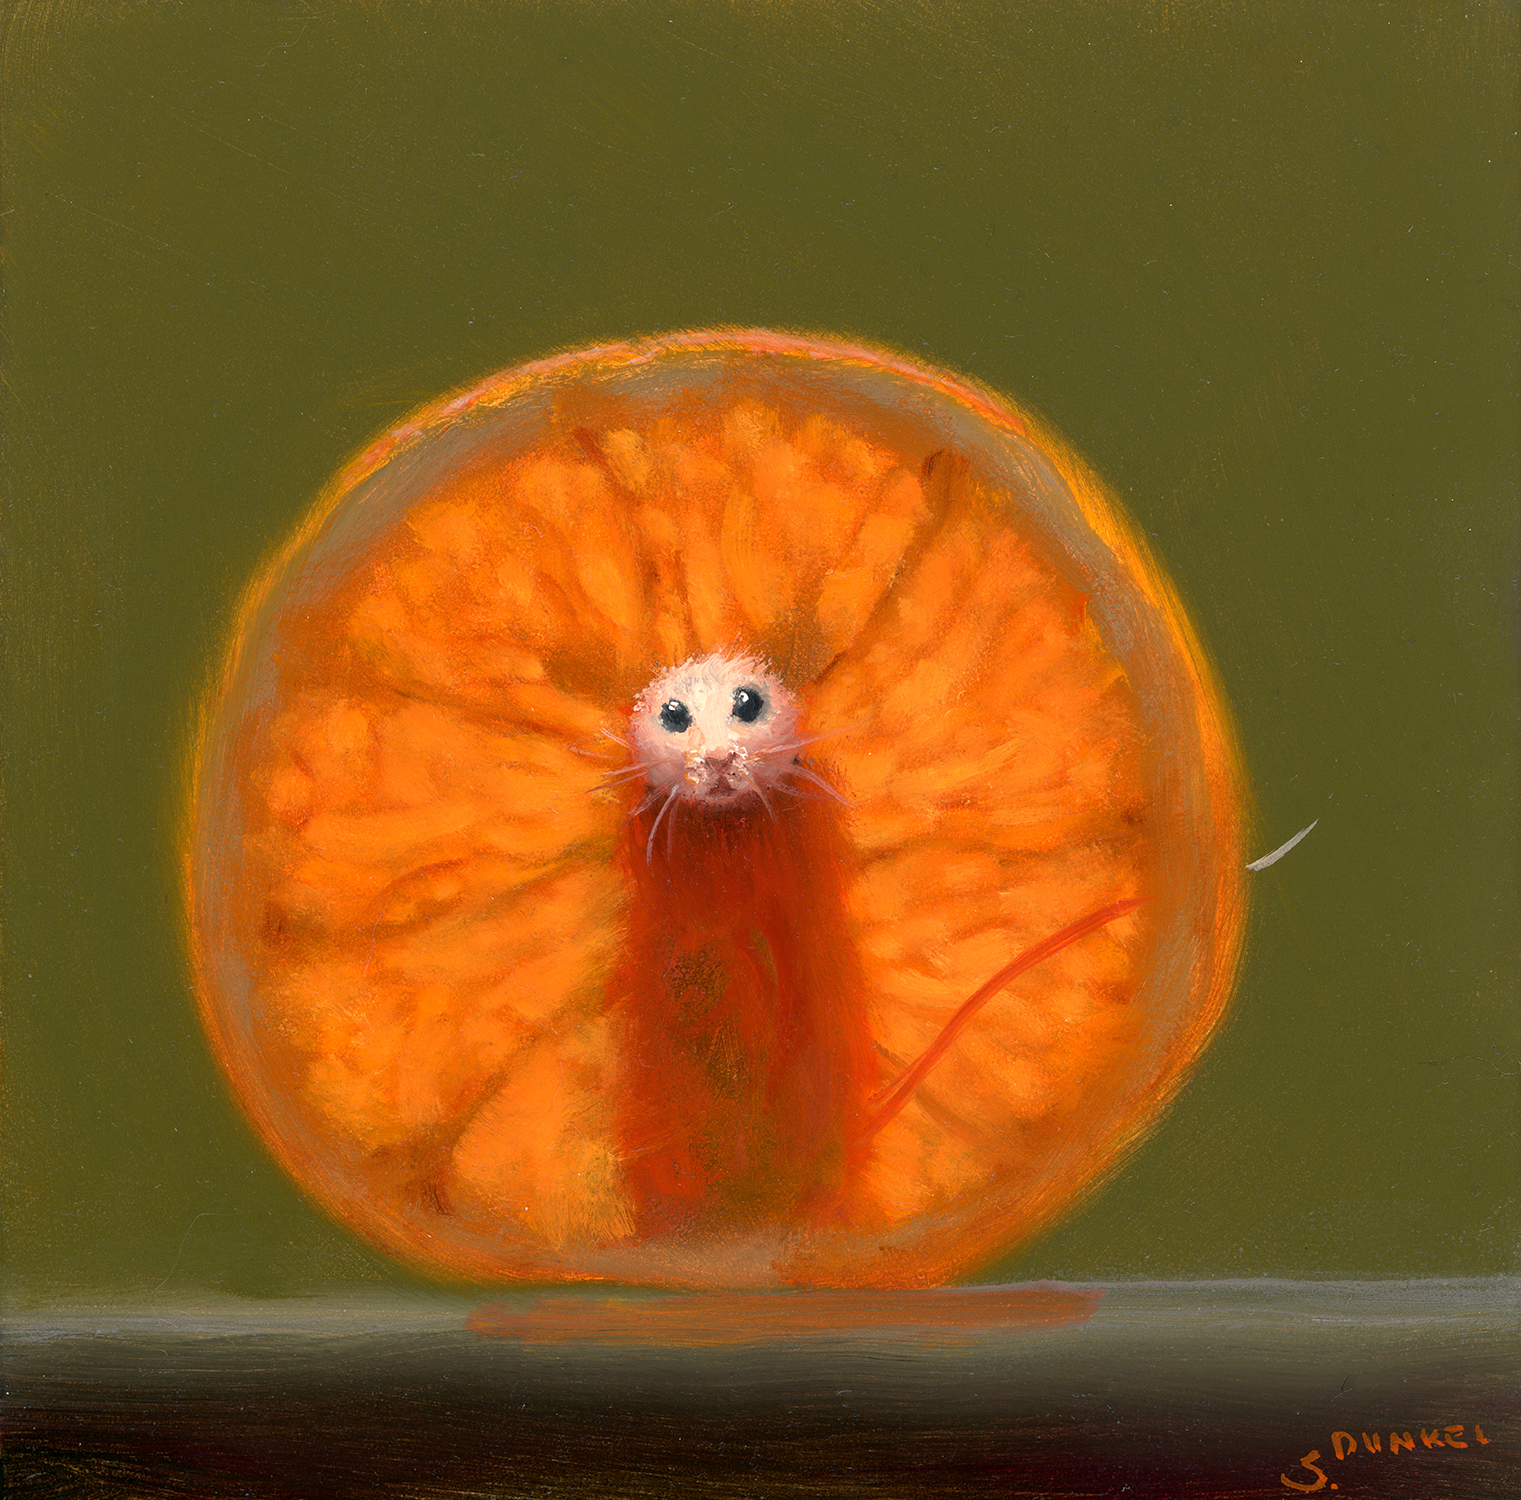 Orange Xray - Dunkel, Stuart